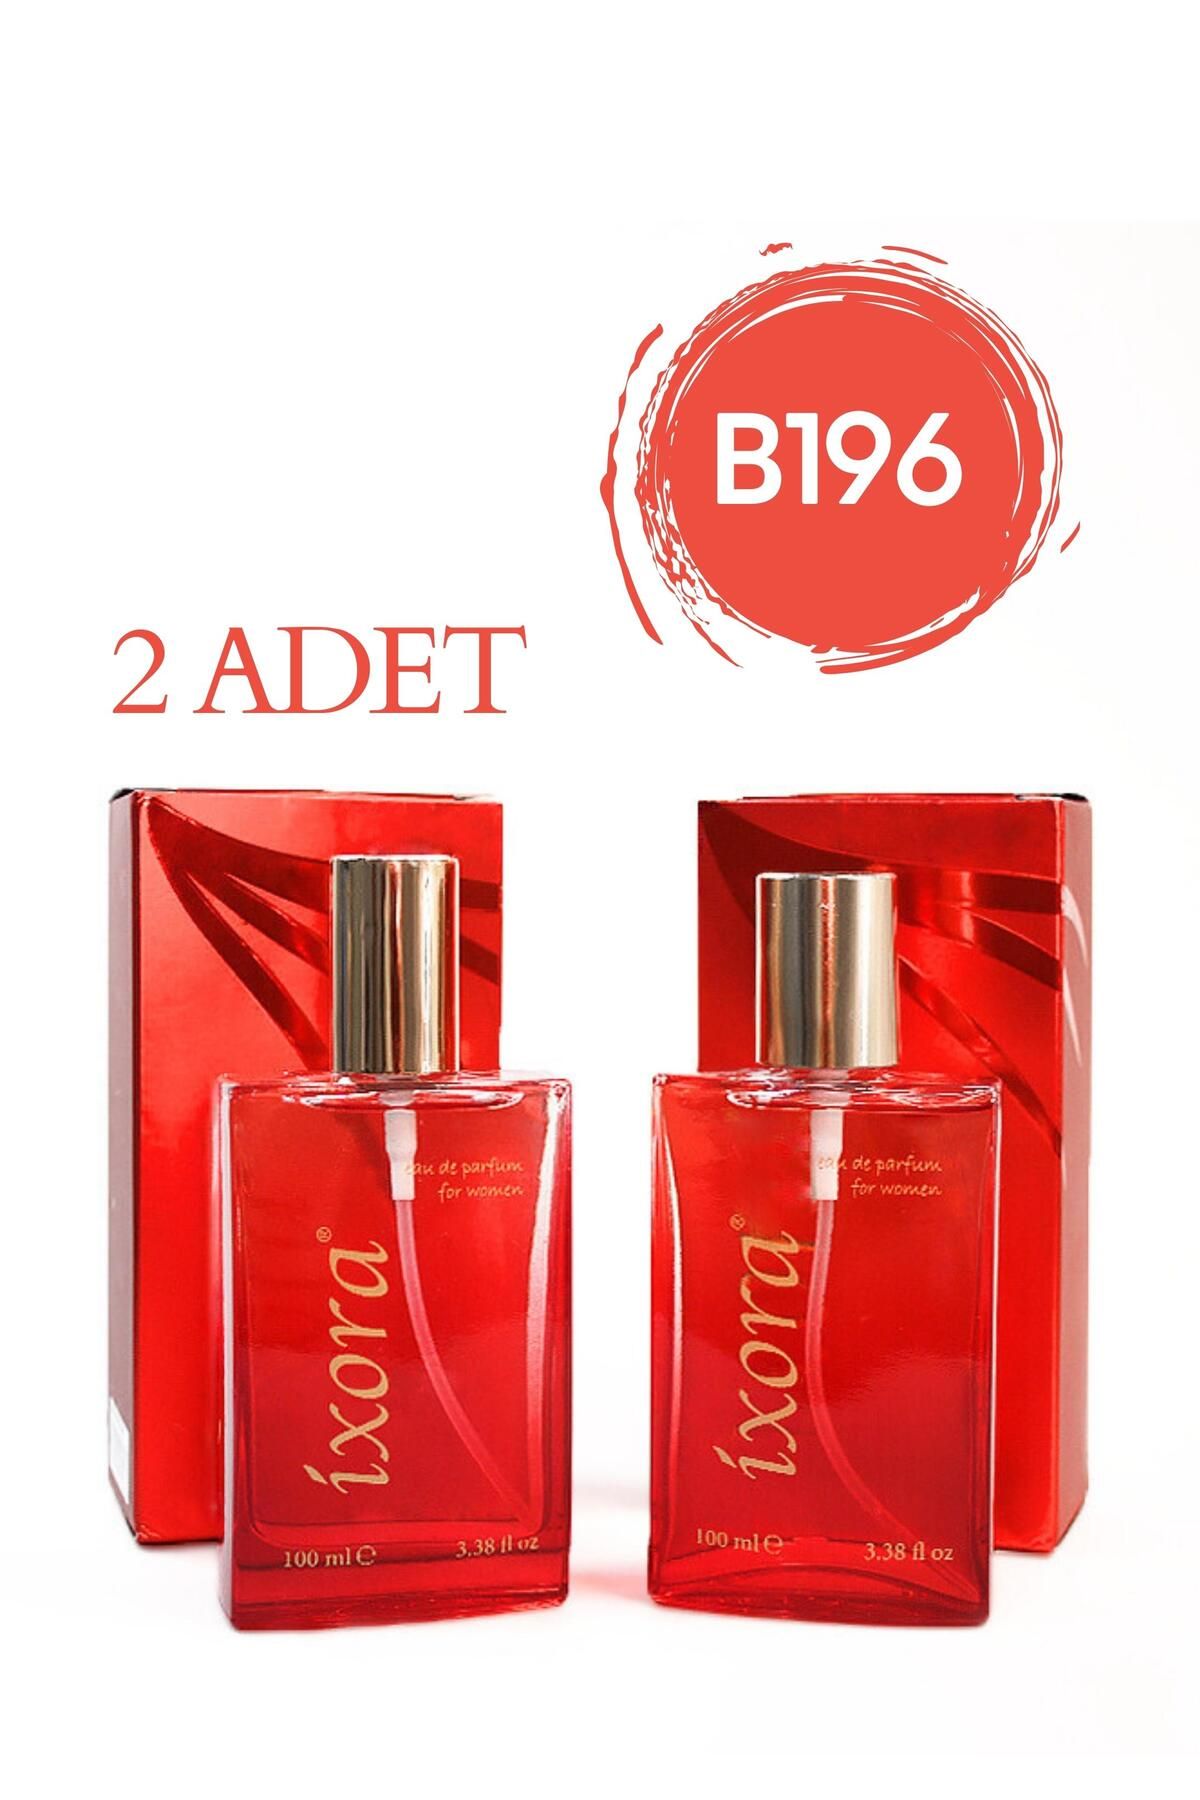 Ixora B196x2 (2 adet ) Kadın Parfüm Mademoıselle 100 ml Edp